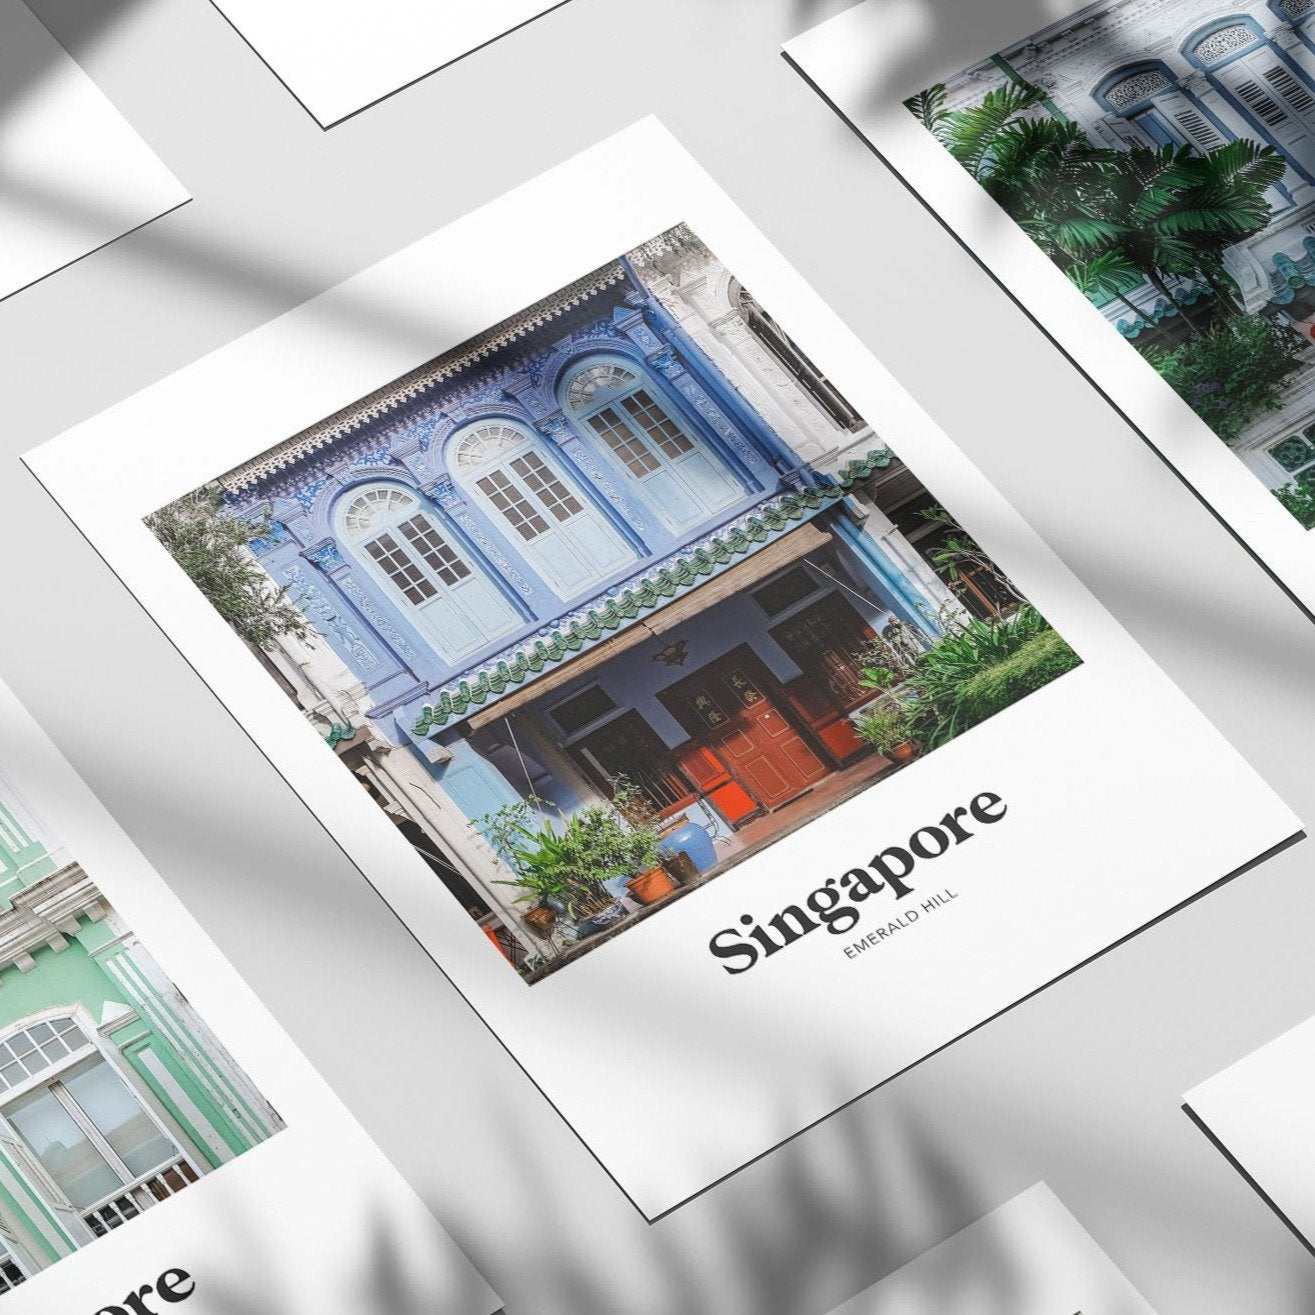 Singapore - Emerald Hill Blue Shophouse Print